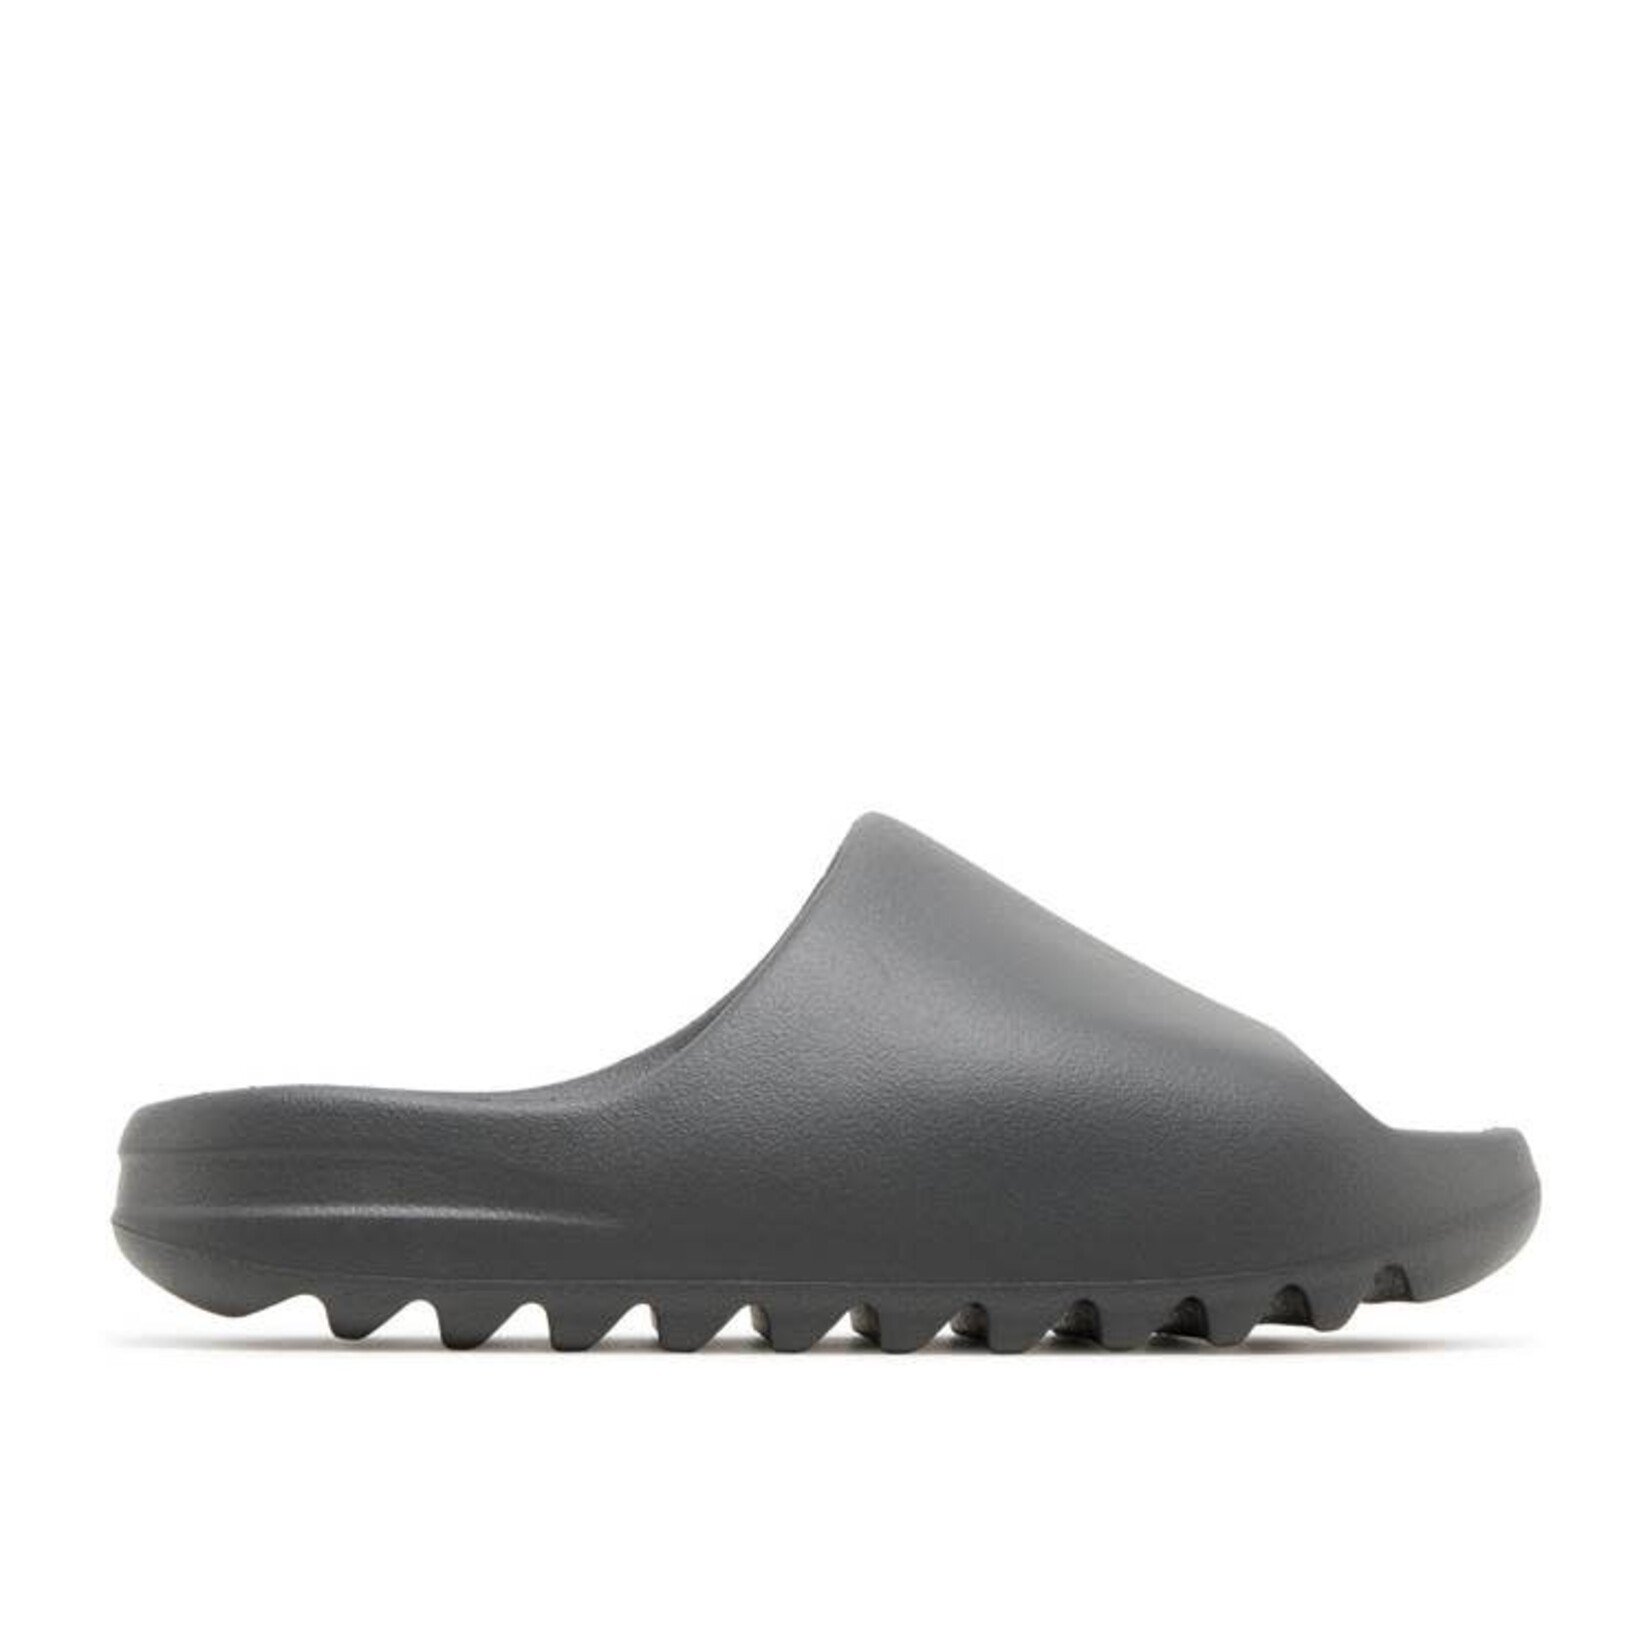 Adidas adidas Yeezy Slide Granite Size 10, DS BRAND NEW - SoleSeattle